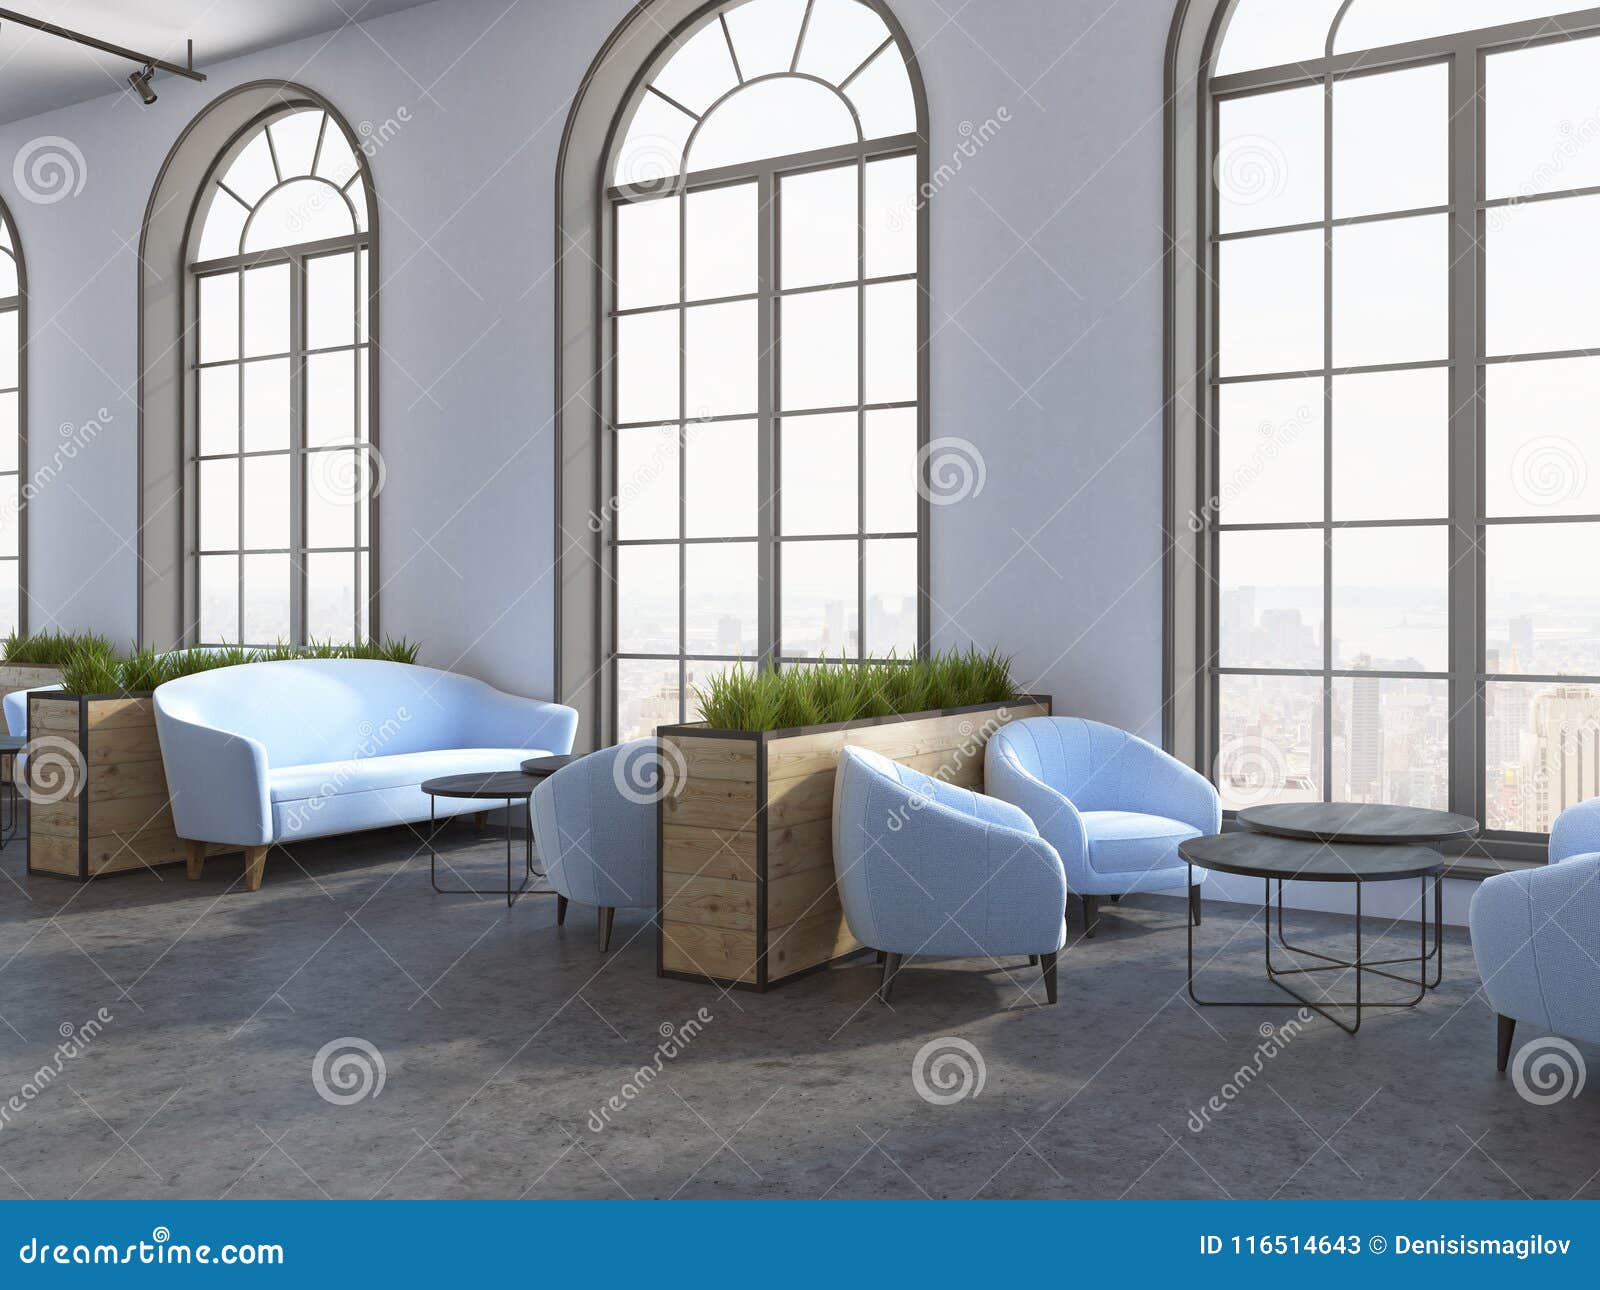 Eco style hotel restaurant, blue armchairs sofas